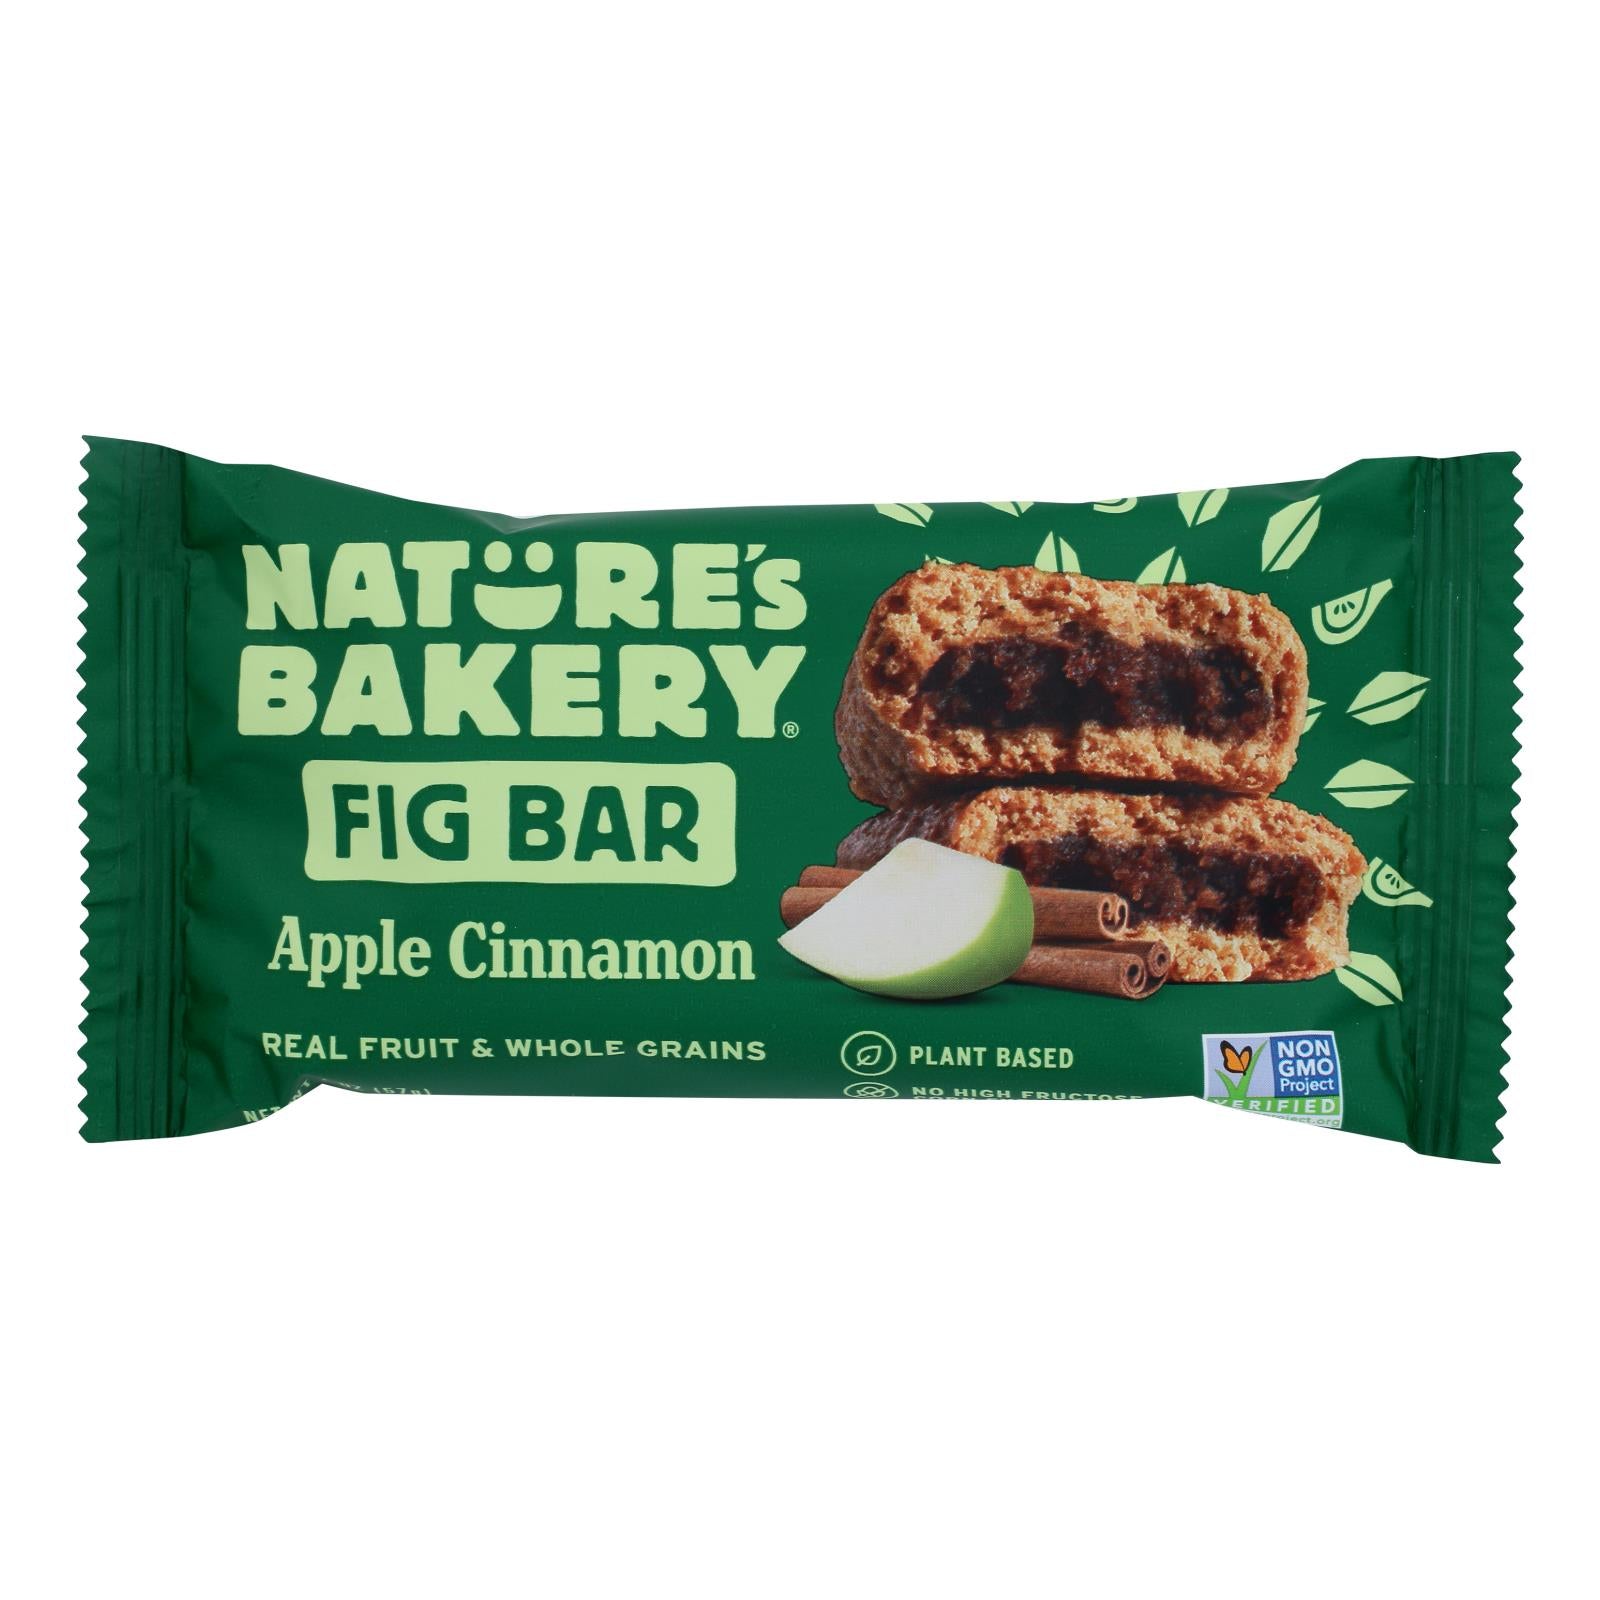 Nature's Bakery Stone Ground Whole Wheat Fig Bar - Apple Cinnamon - Case Of 12 - 2 Oz.